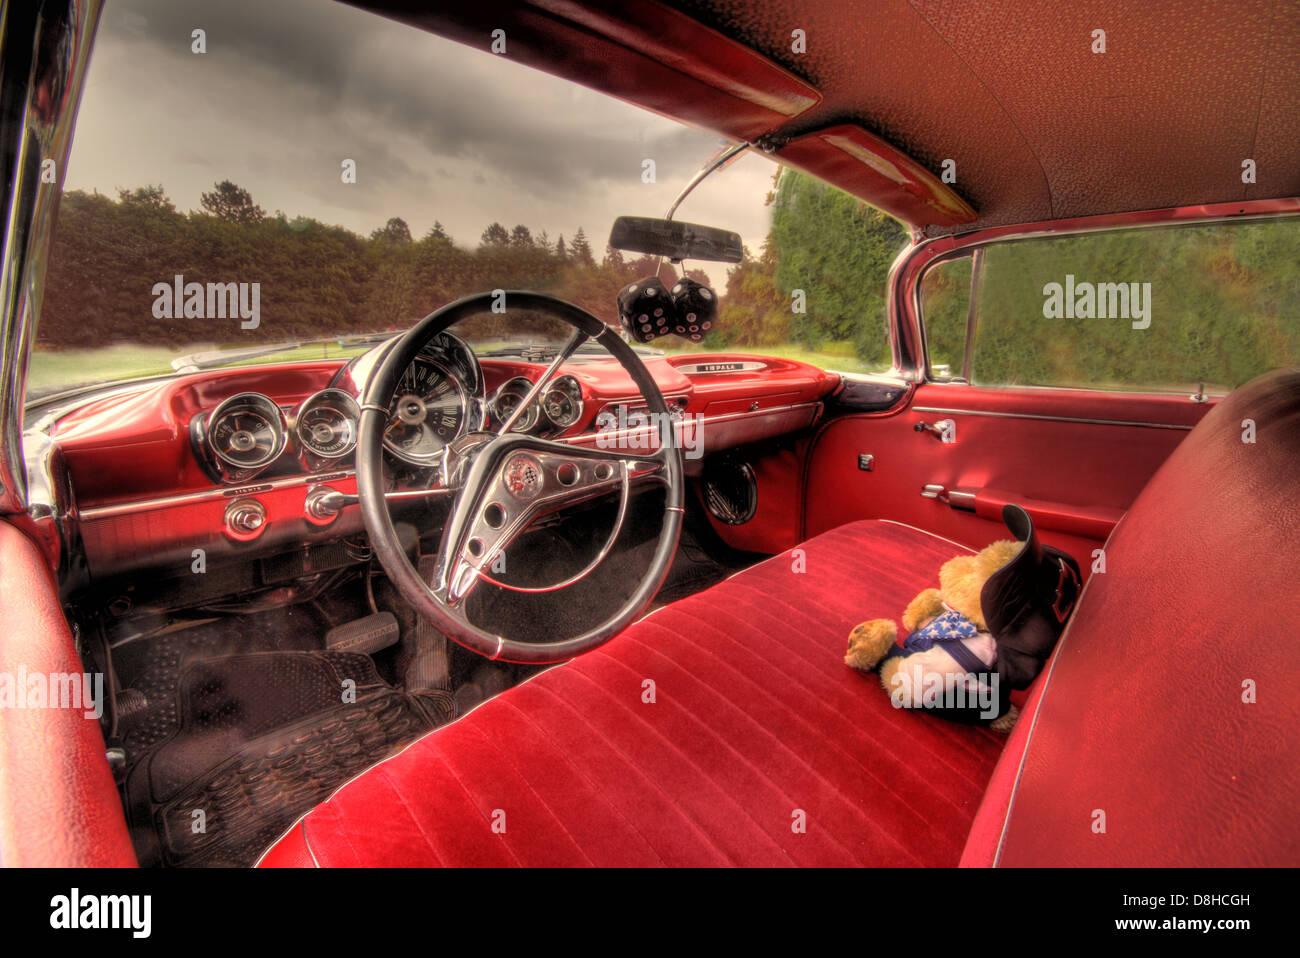 Red Chevy Impala ,classic automobile, car interior, USA Stock Photo